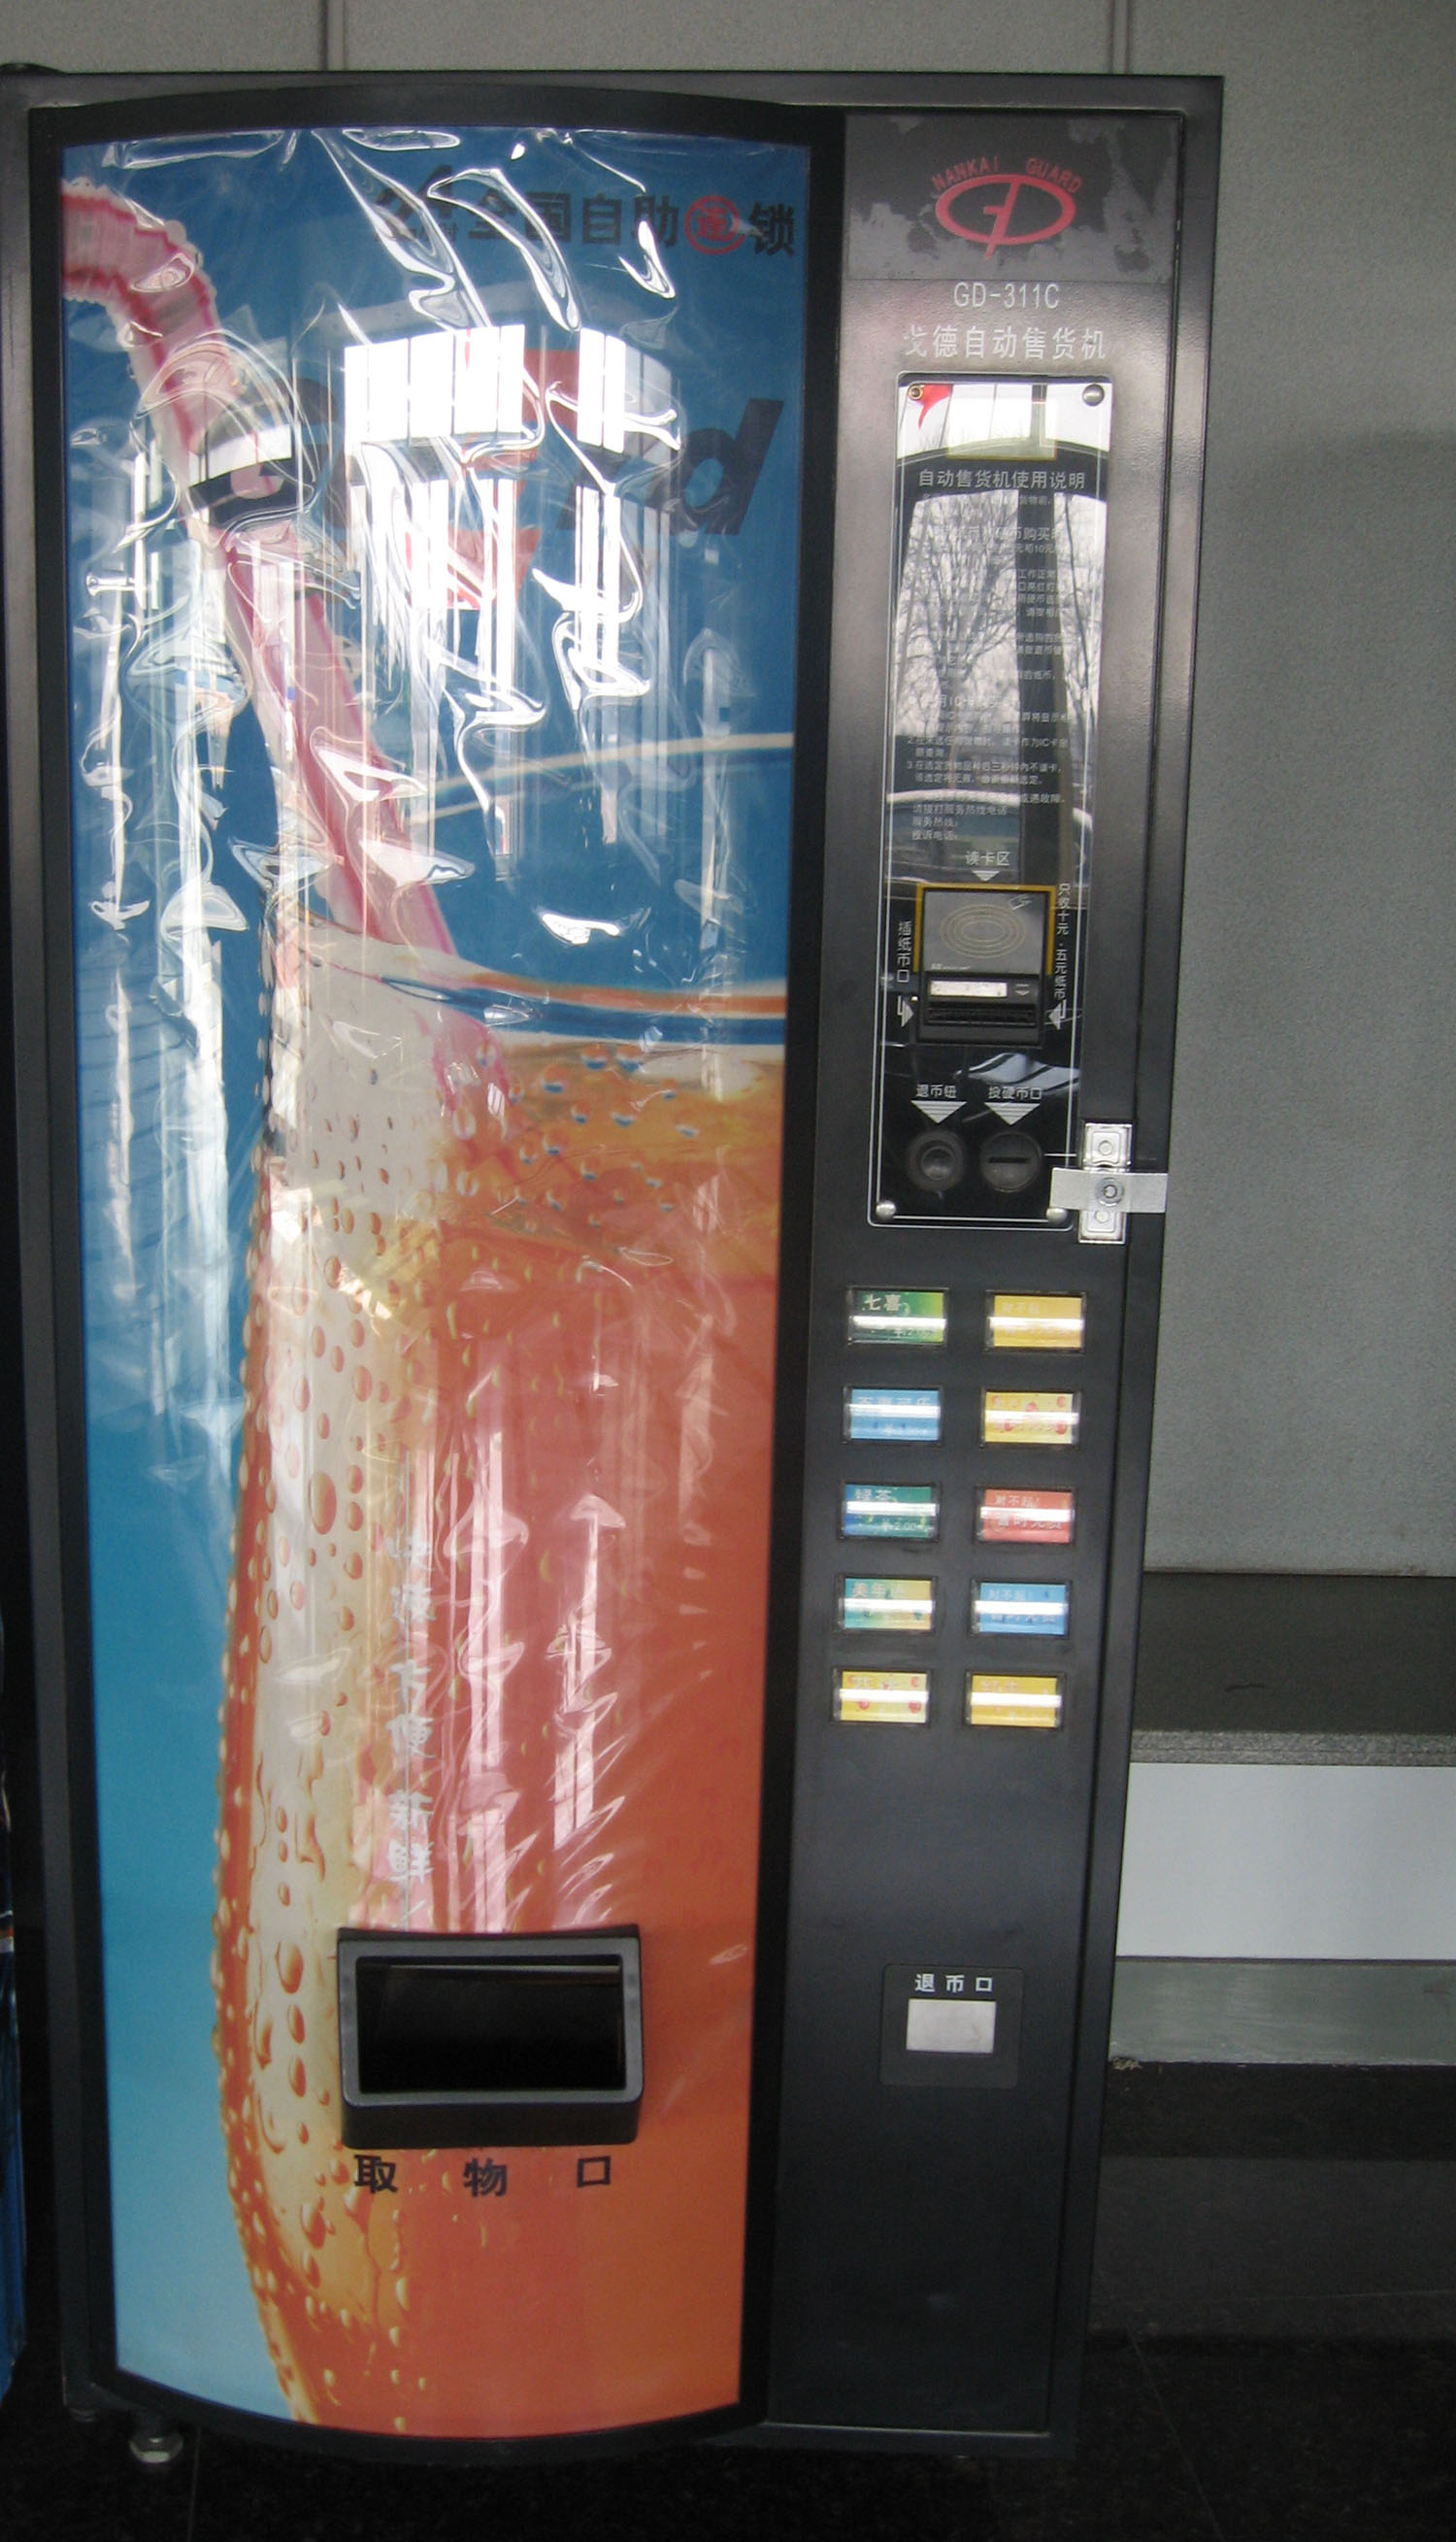 GD311C can vending machine